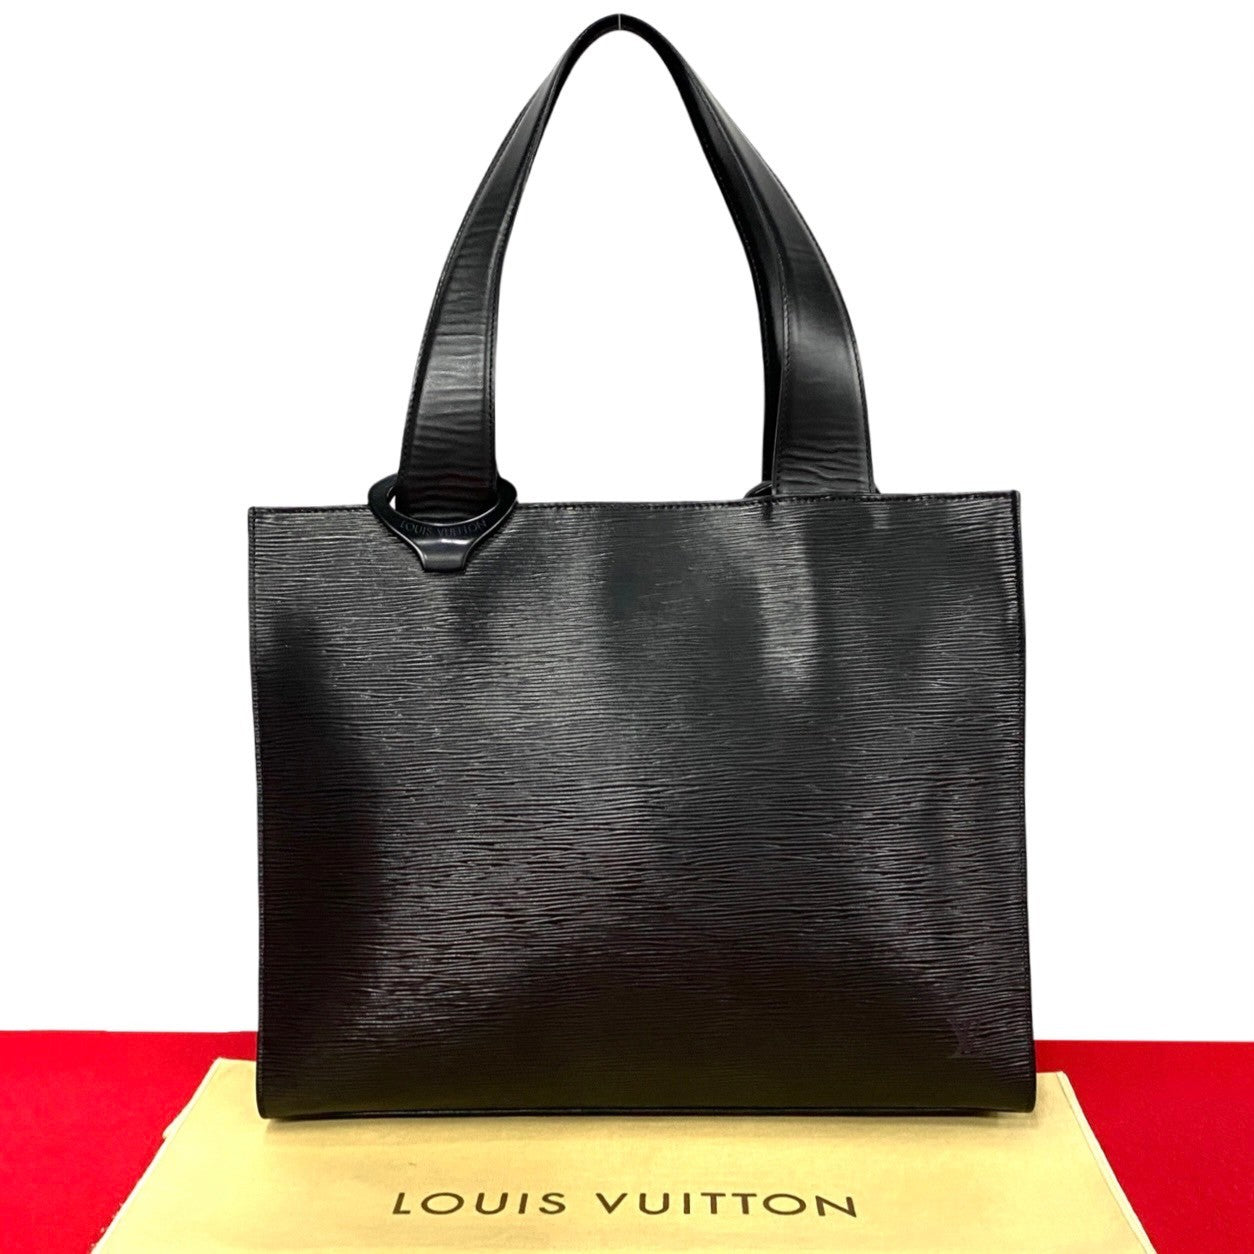 Louis Vuitton Epi Gemo Tote Bag Leather Shoulder Bag M52452 in Excellent condition